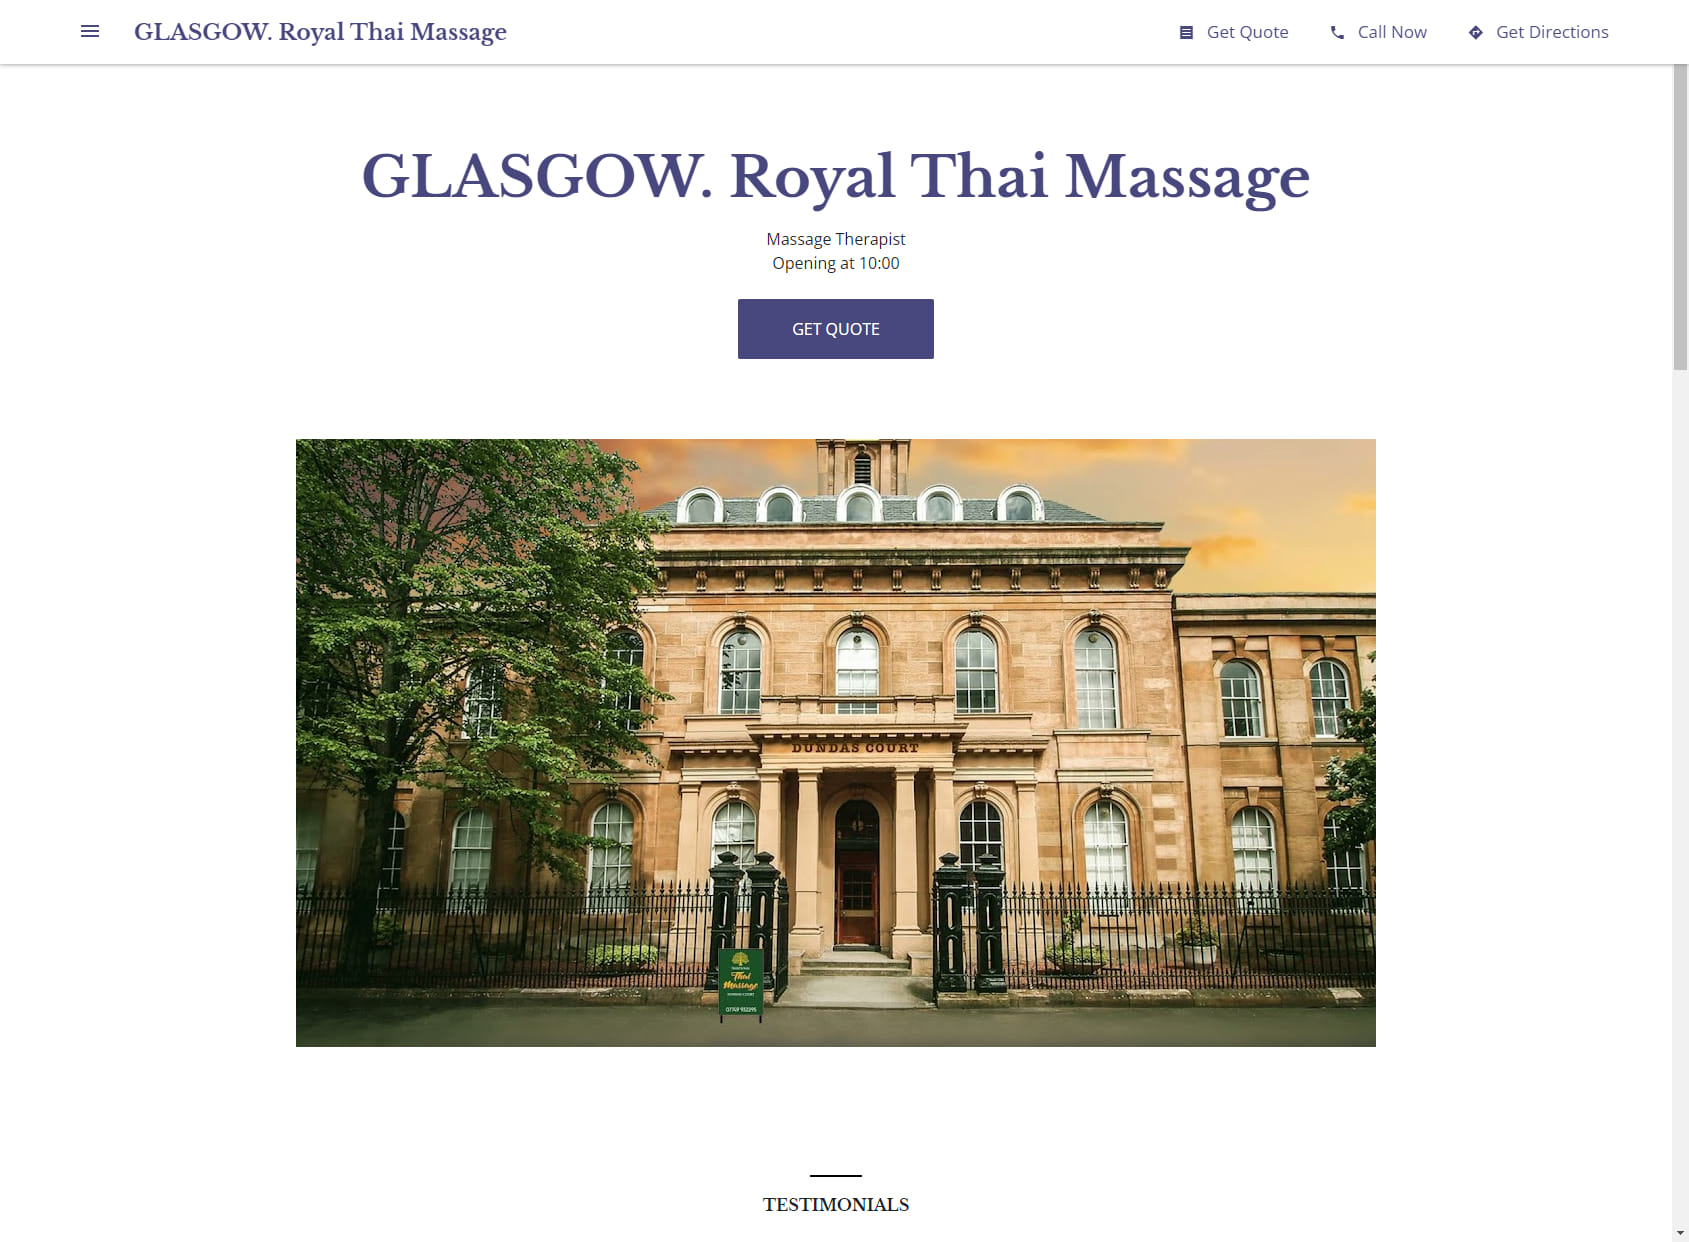 Royal Thai Massage GLASGOW